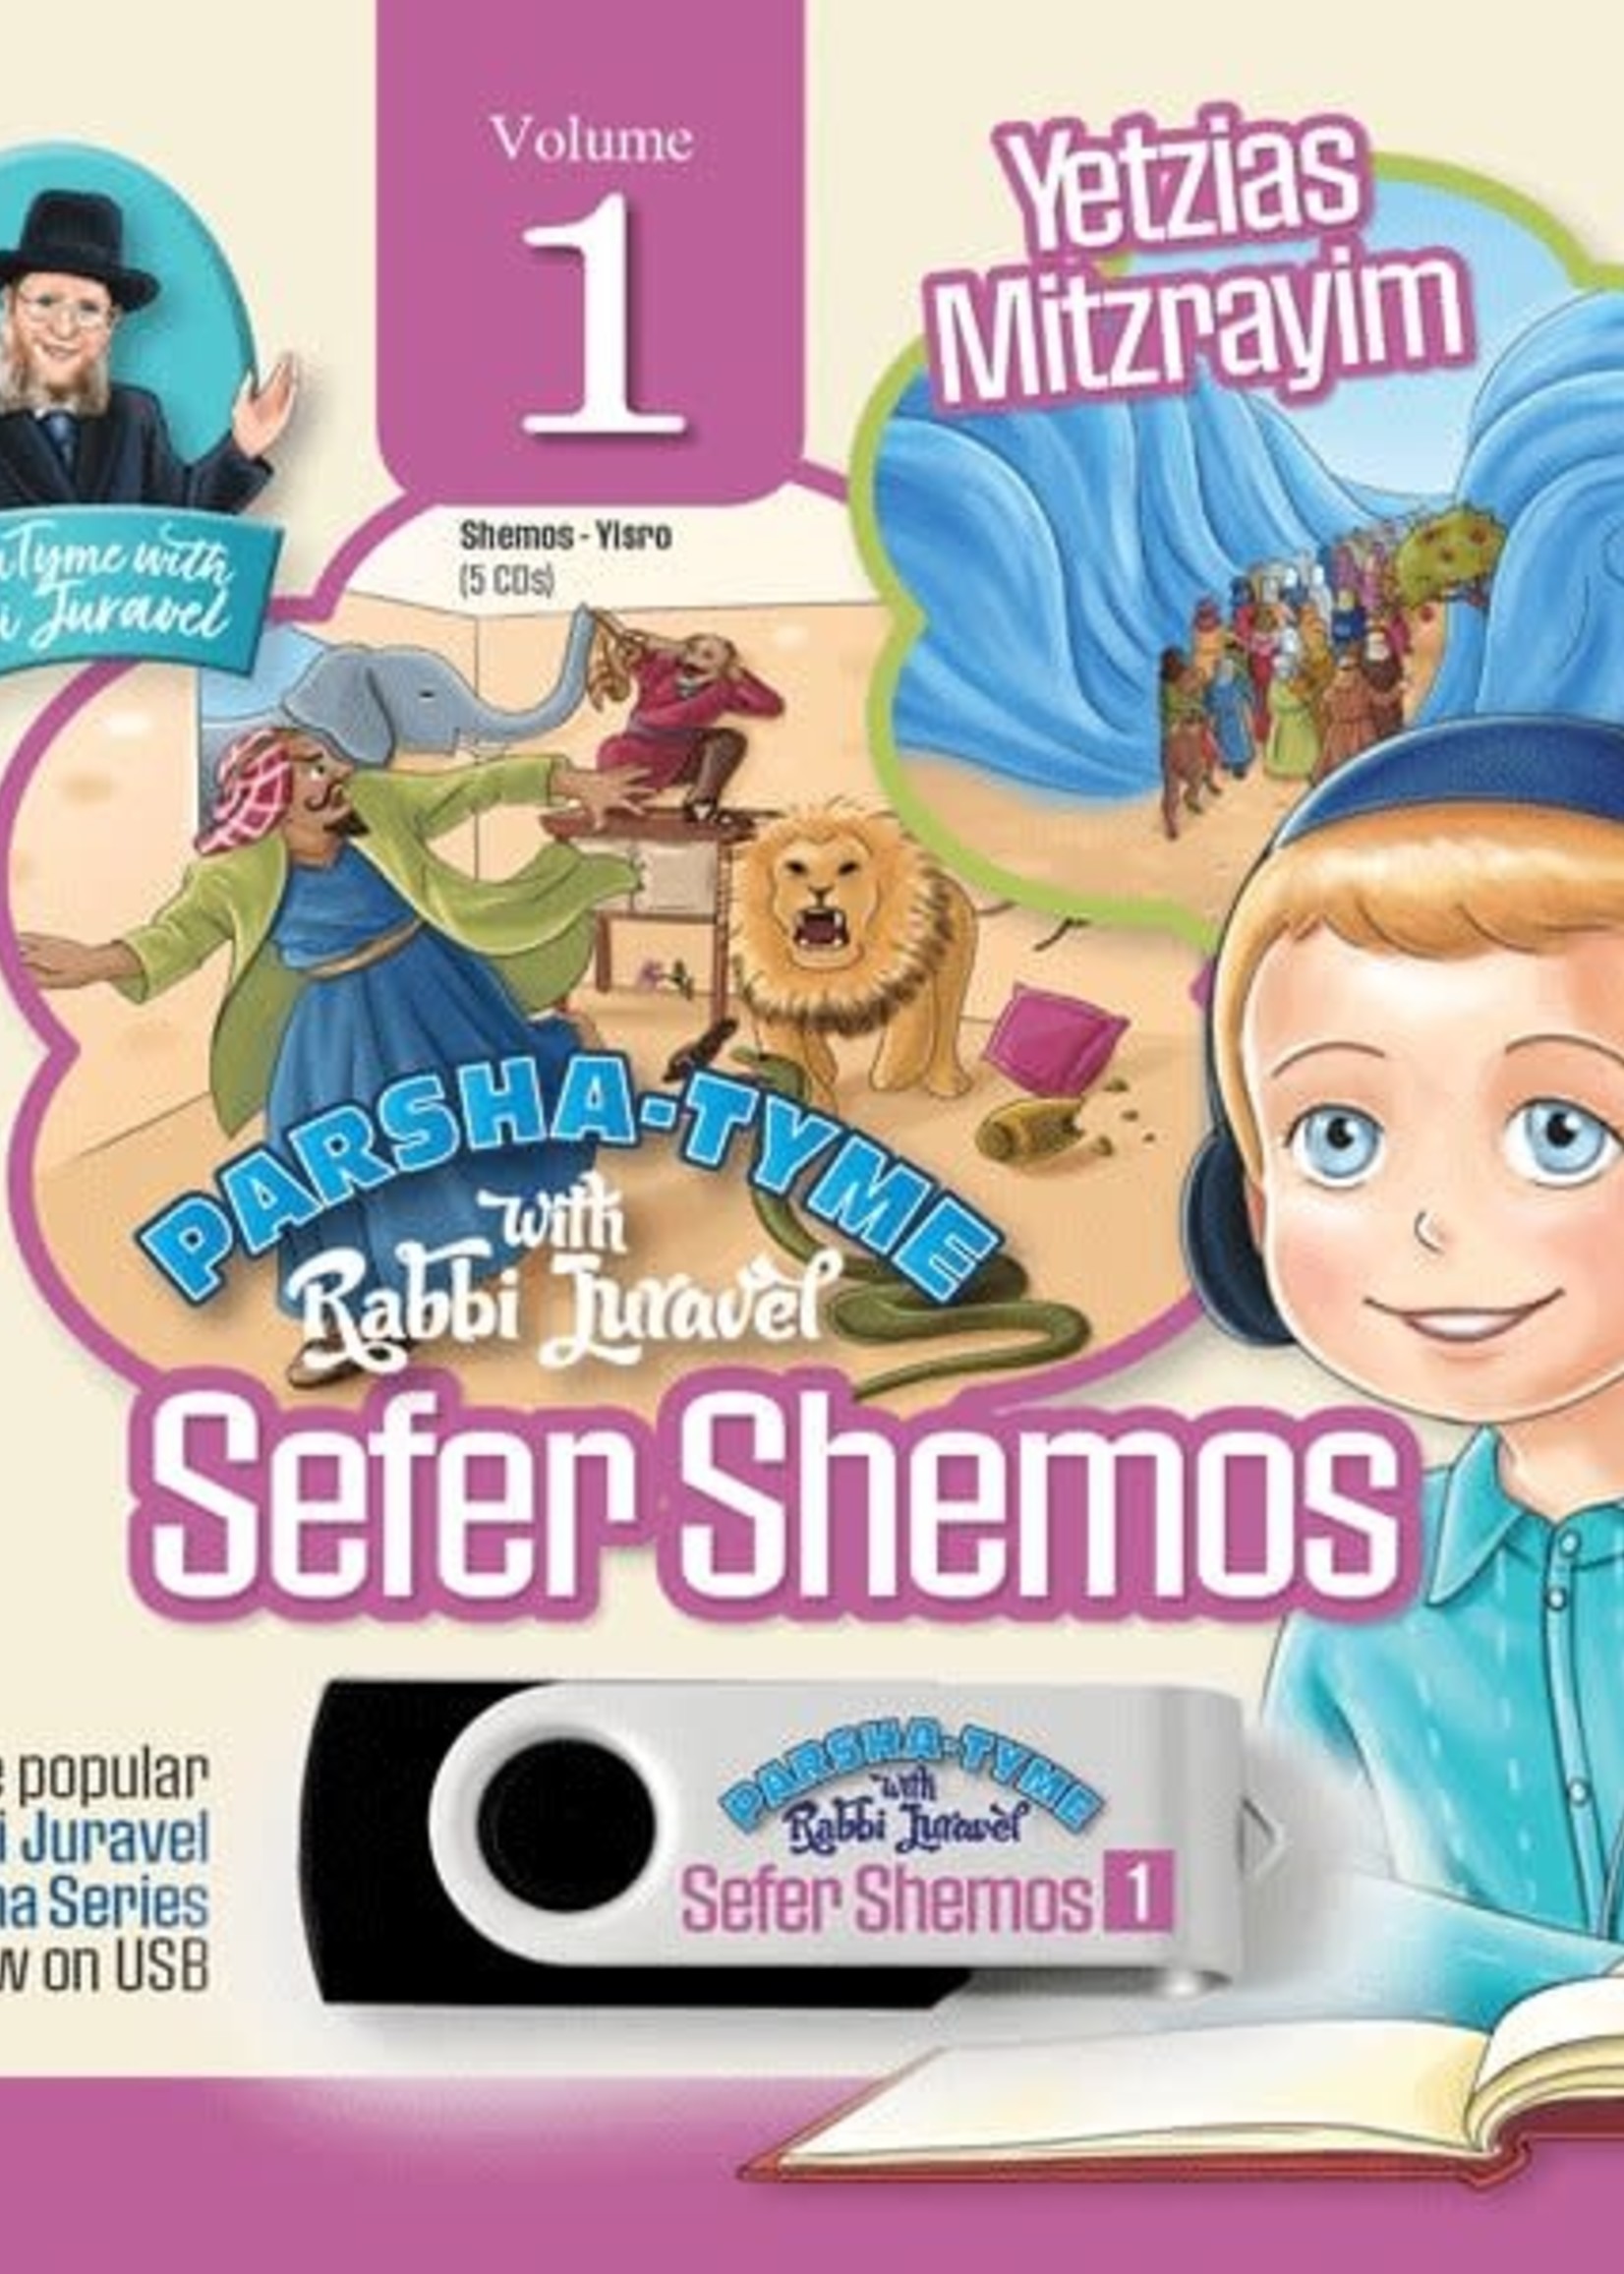 Parsha Tyme with Rabbi Juravel USB- Sefer Shemos Vol. 1 - Shemos-Yisro